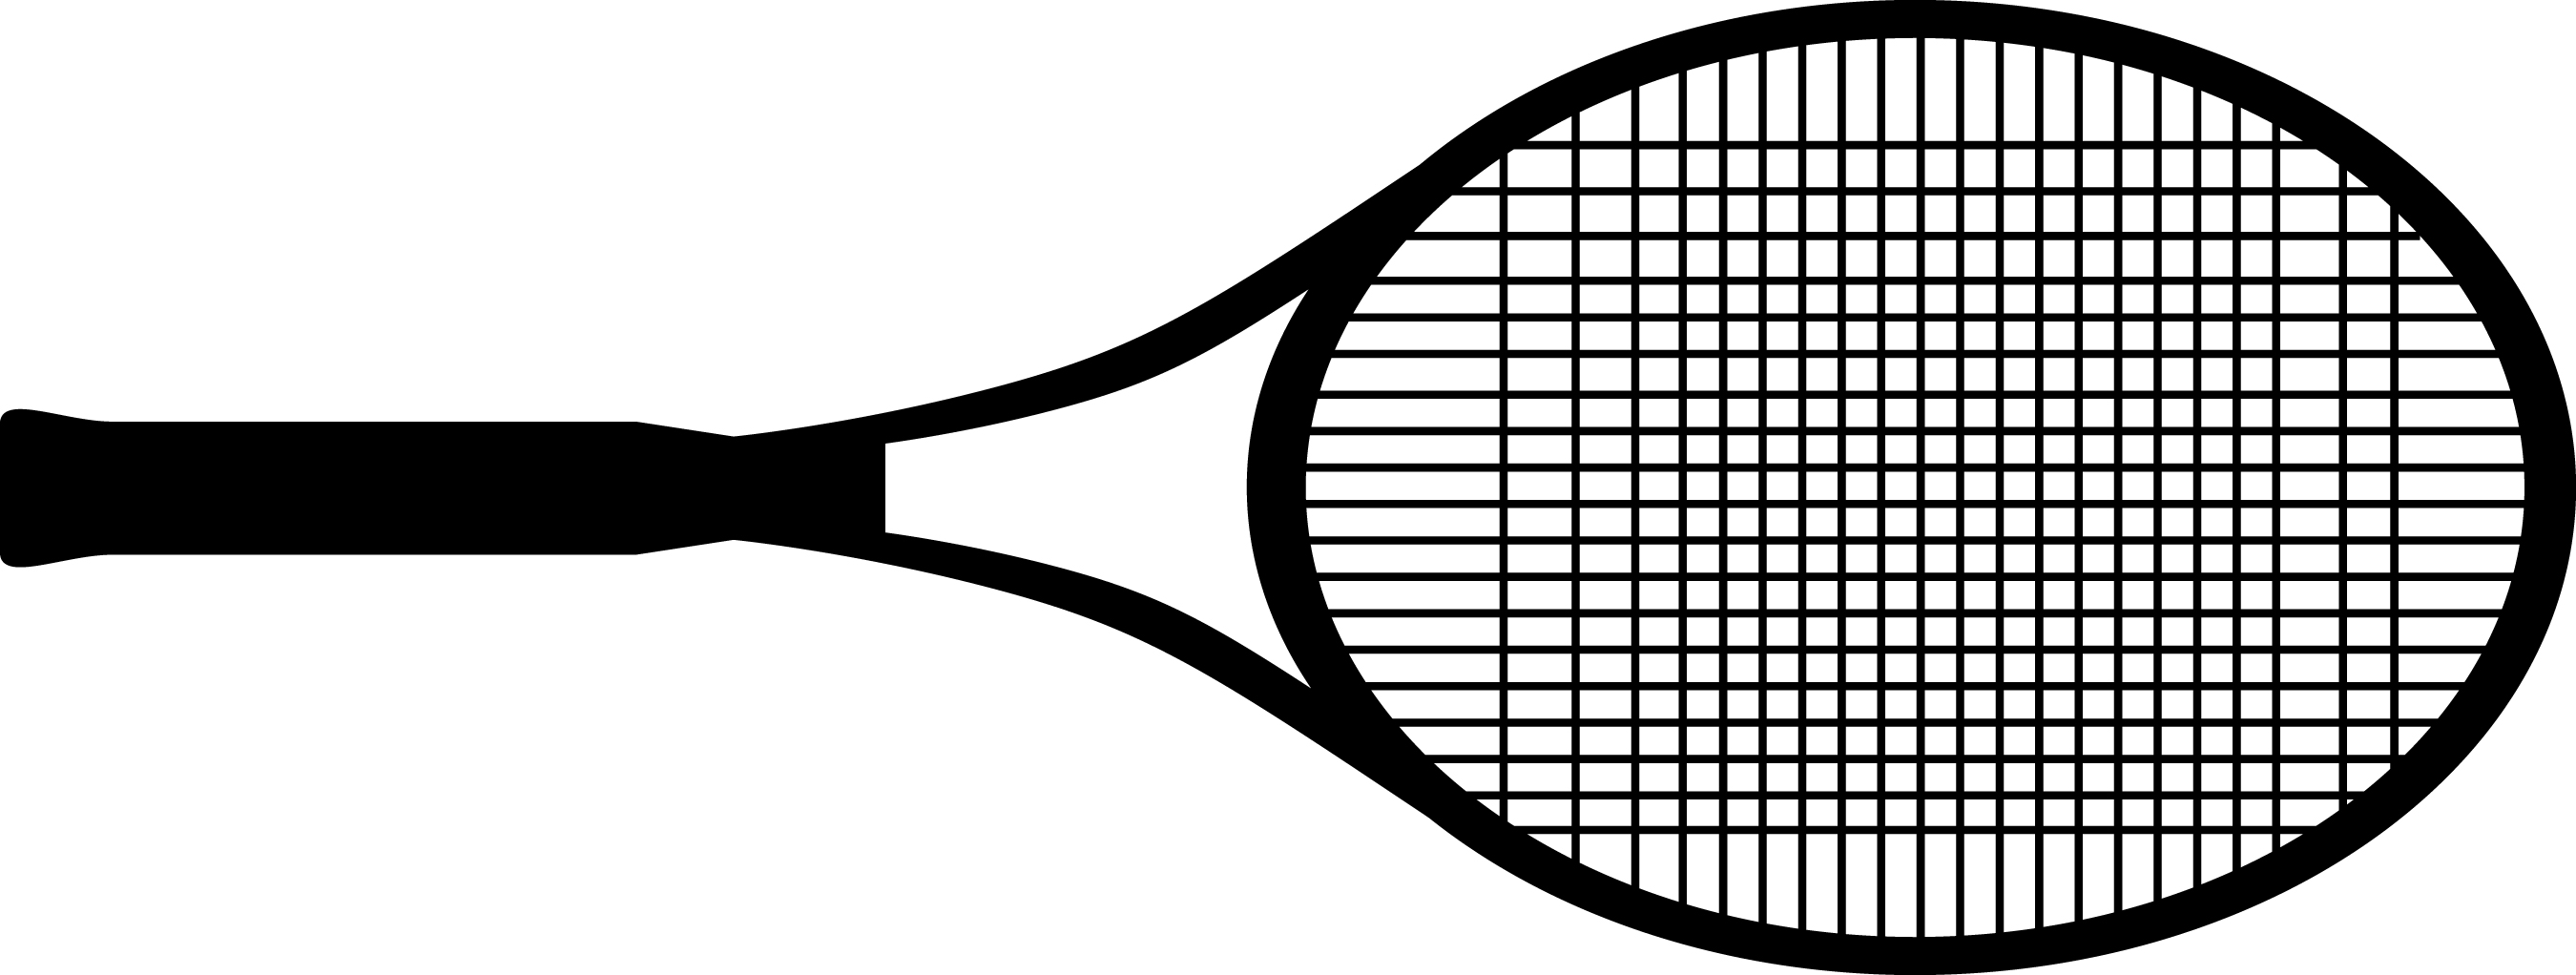 free vector tennis clipart - photo #44